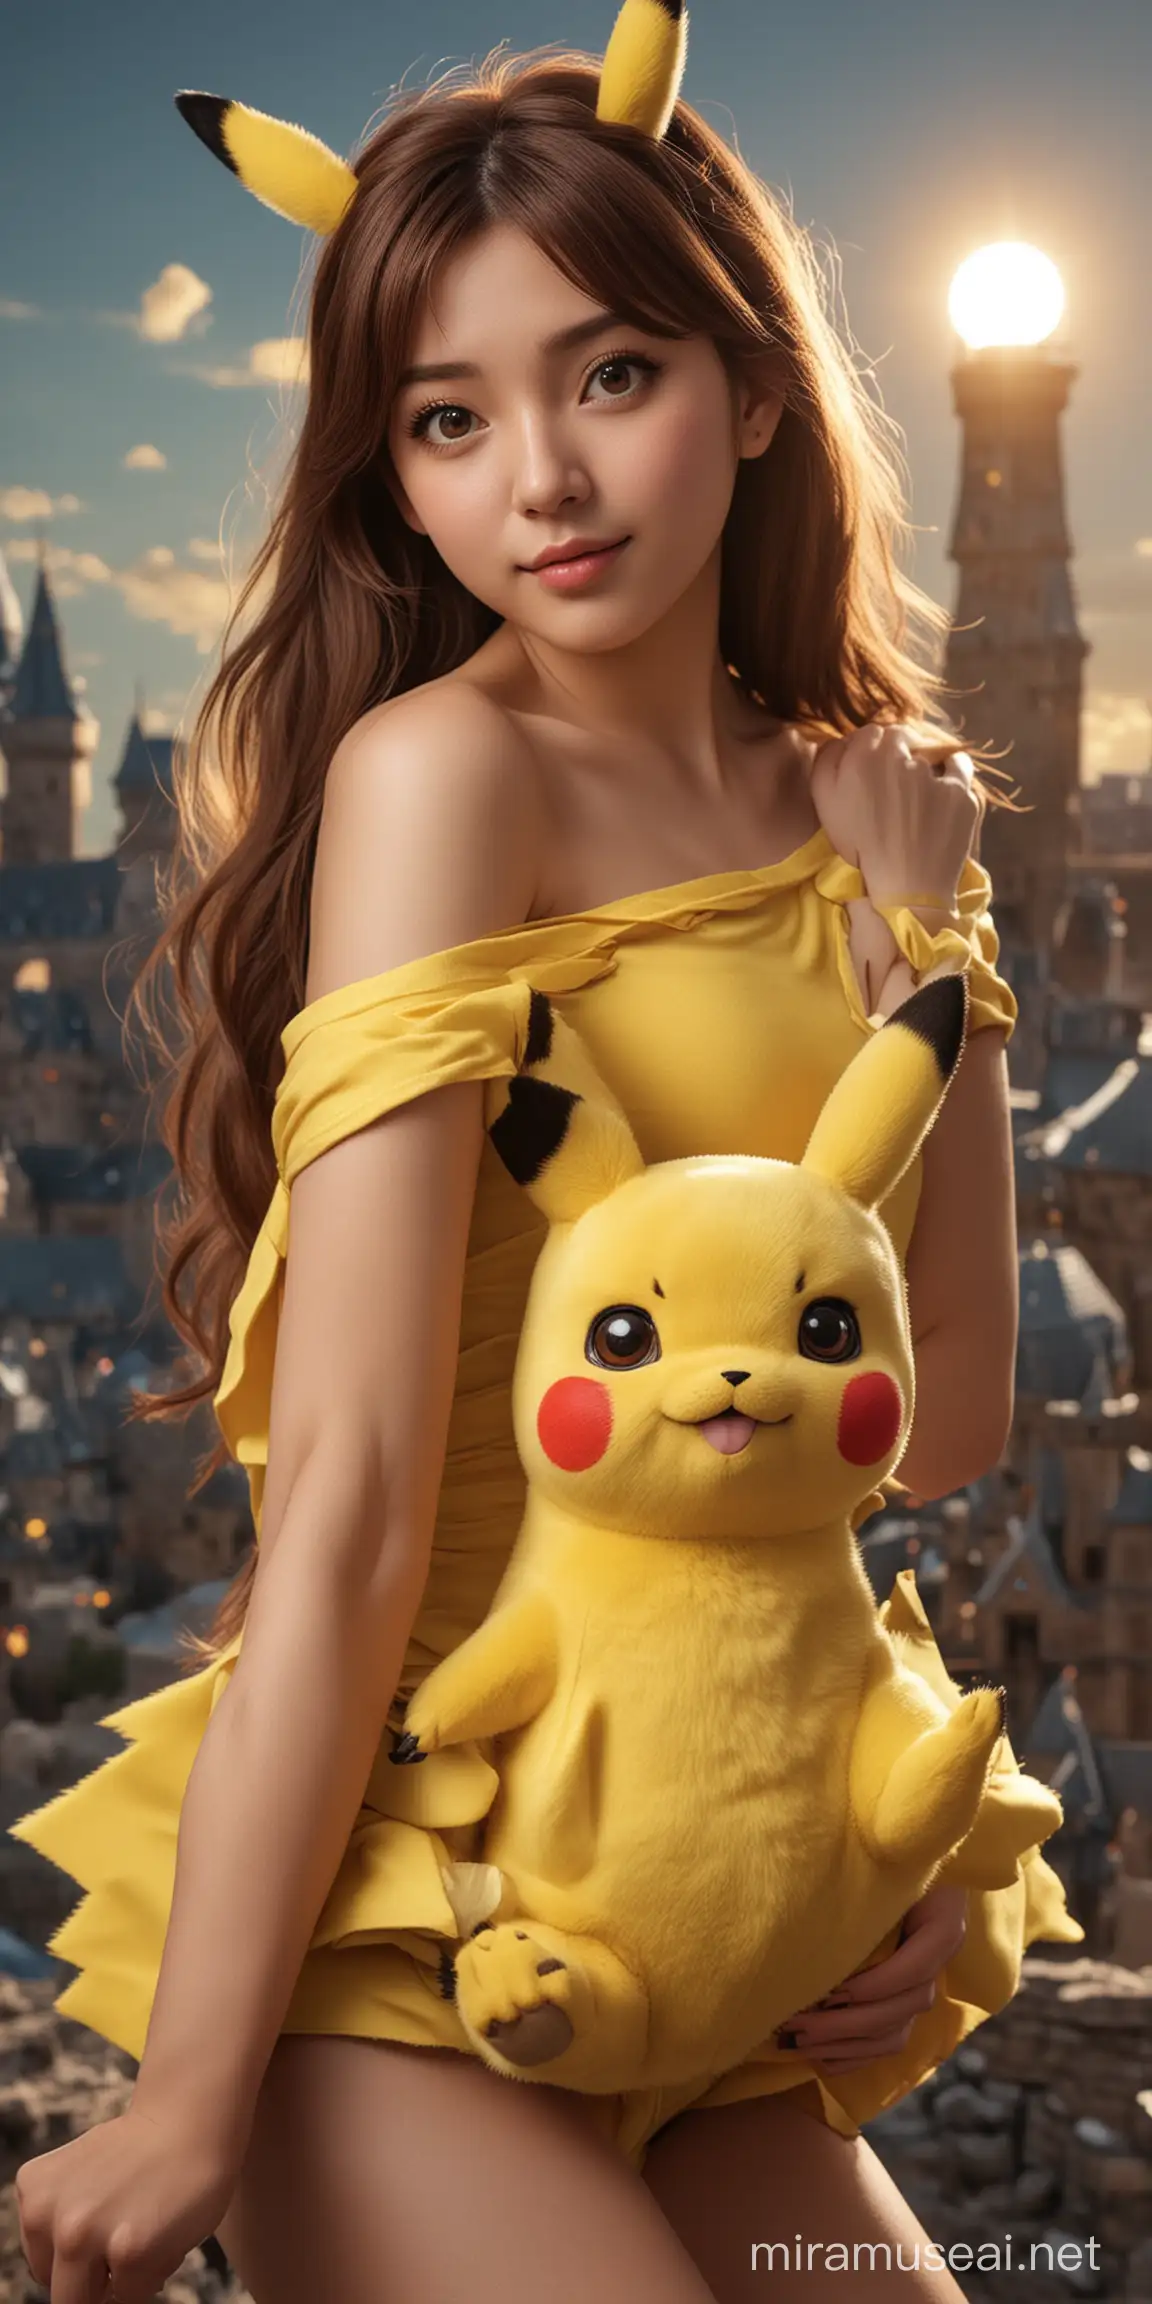 Realistic Idol Girl with Superhero Pikachu in Castle Studio Portrait